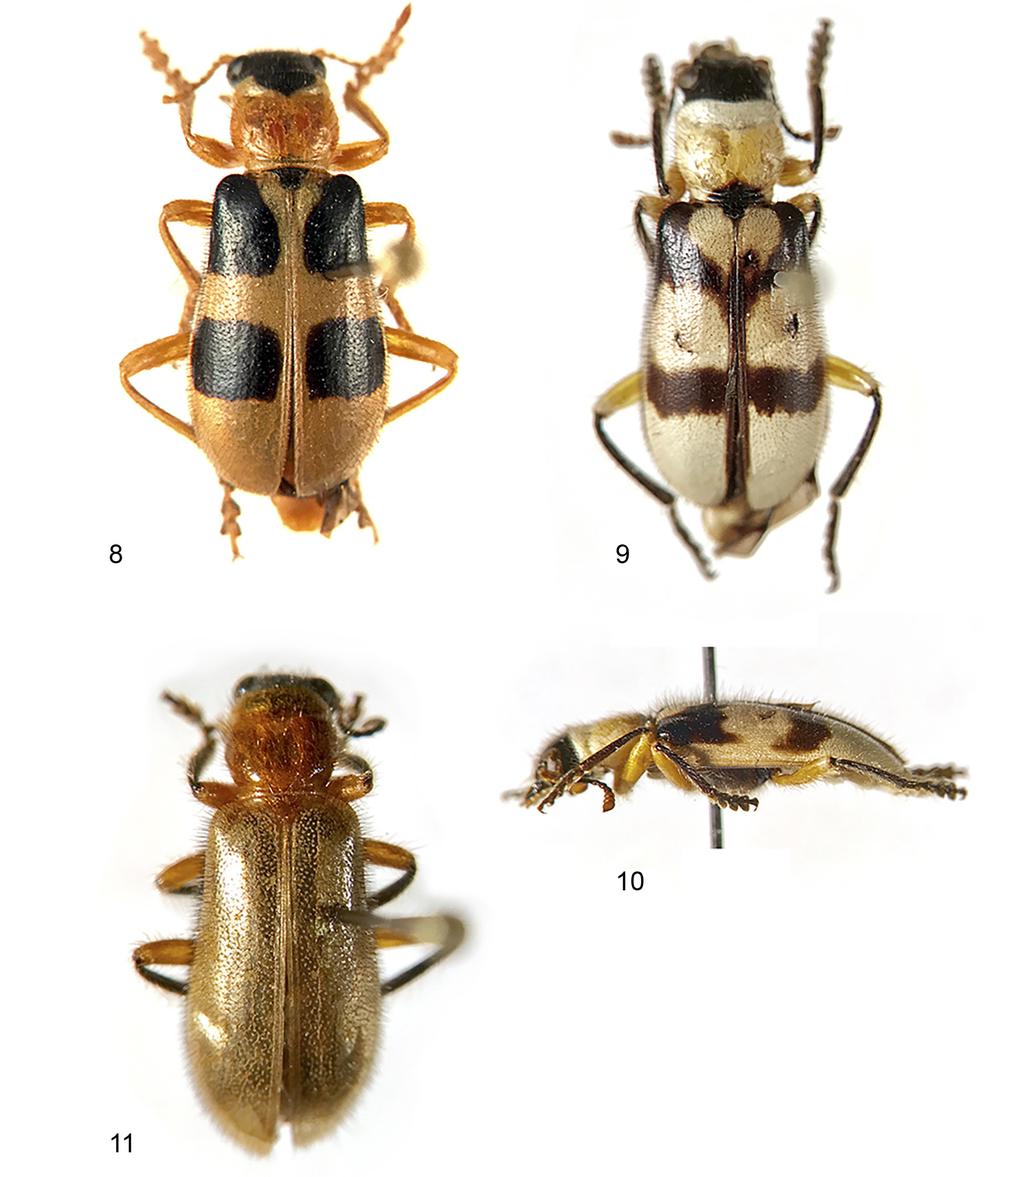 New Mimetic Cleridae Insecta Mundi 0591, December 2017 15 Figures 8 11. Quadrophenia n.spp.